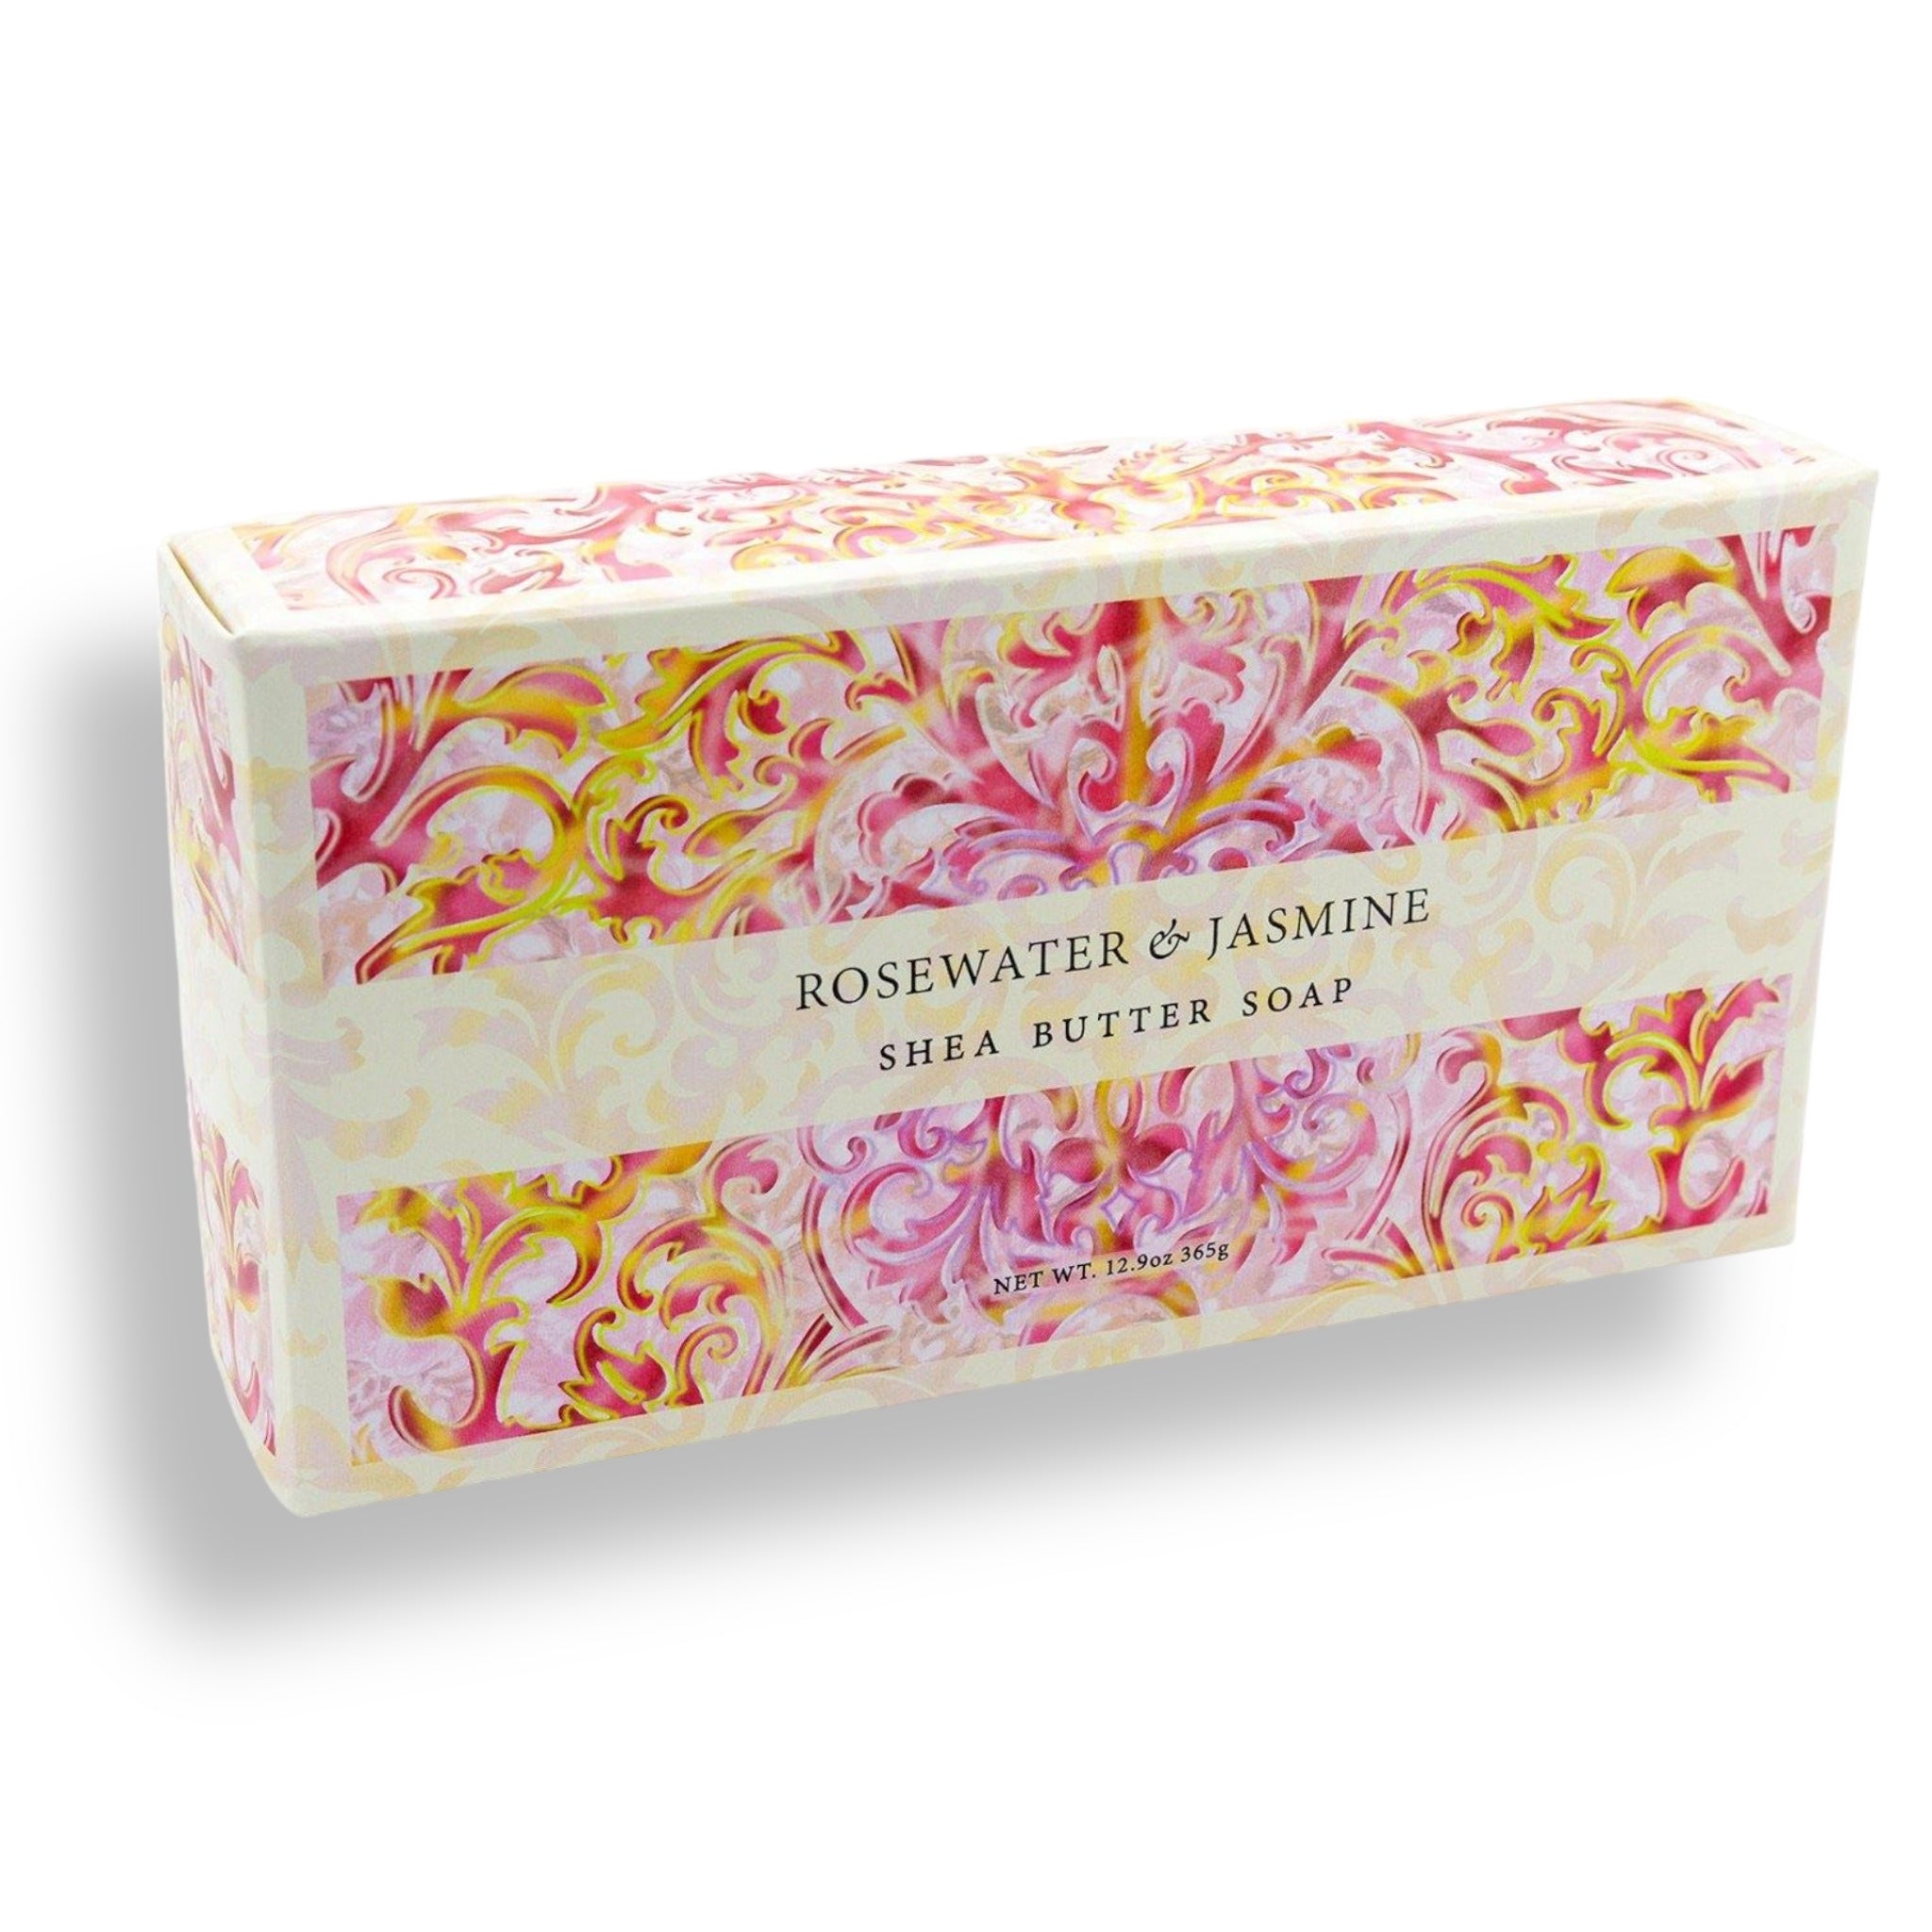 Greenwich Bay Trading Company Rosewater Jasmine soap gift set